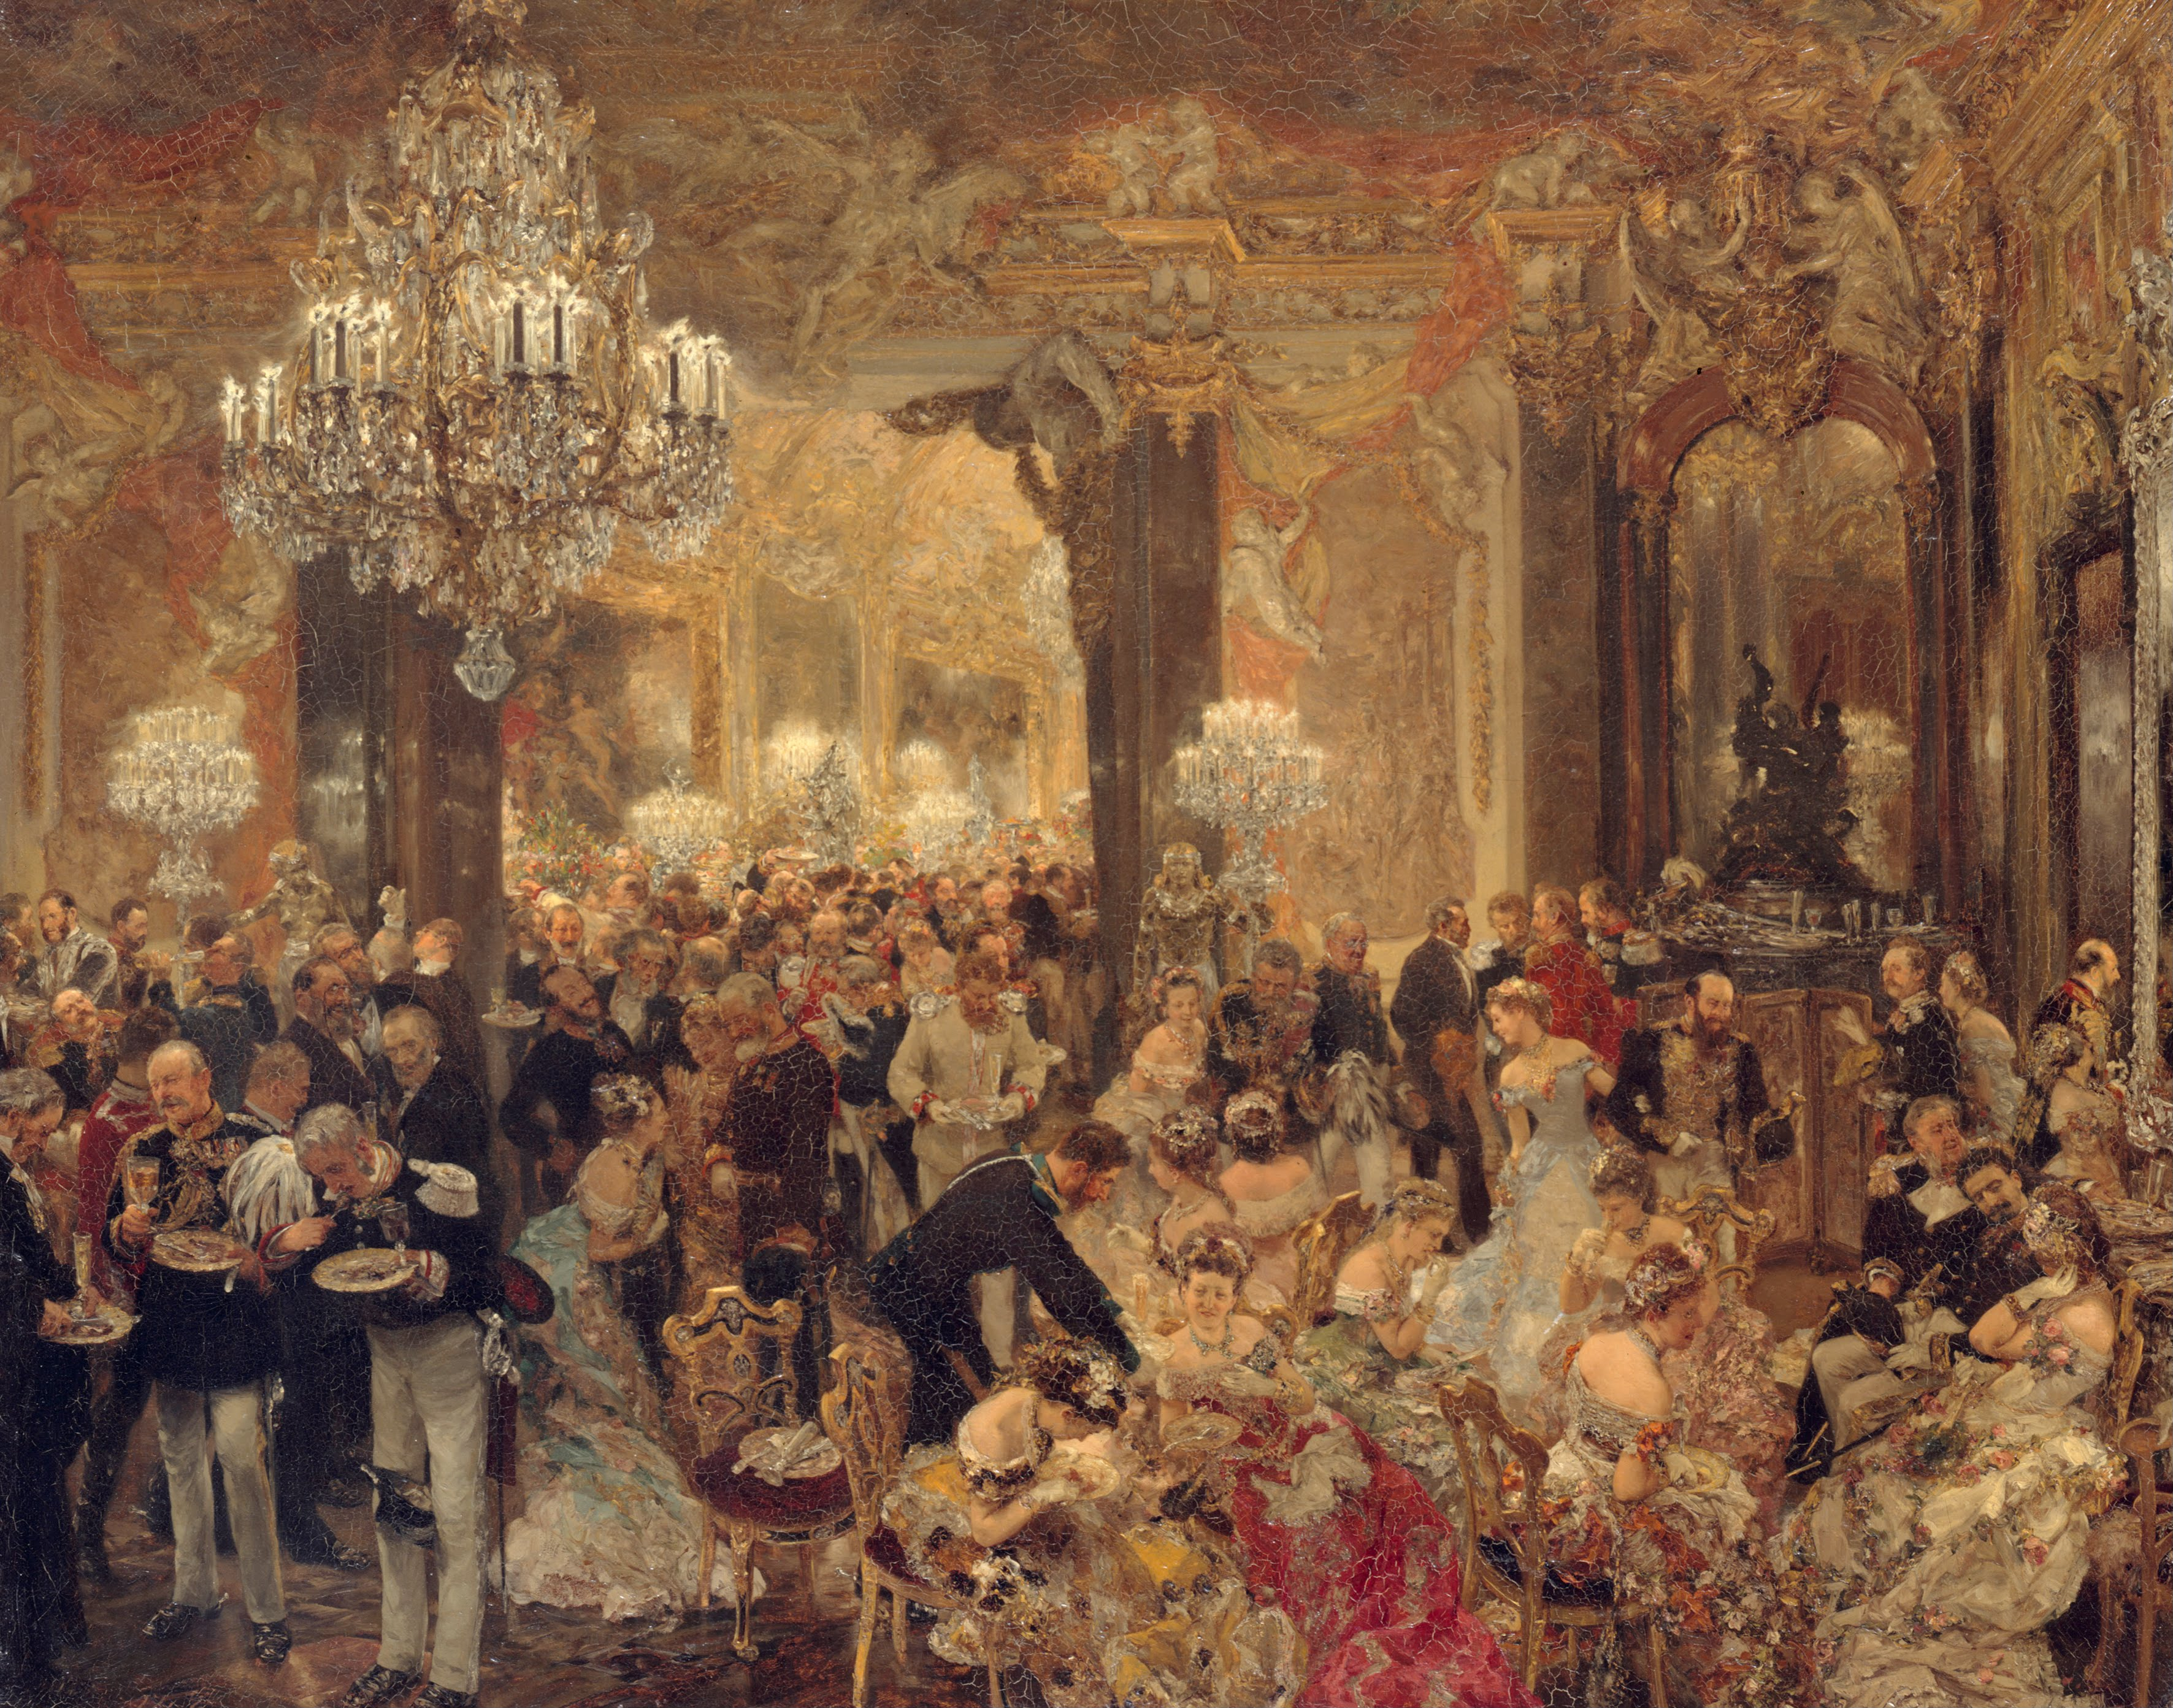 The Dinner at the Ball by Adolph von Menzel - 1878 - 71 x 90 cm Alte Nationalgalerie